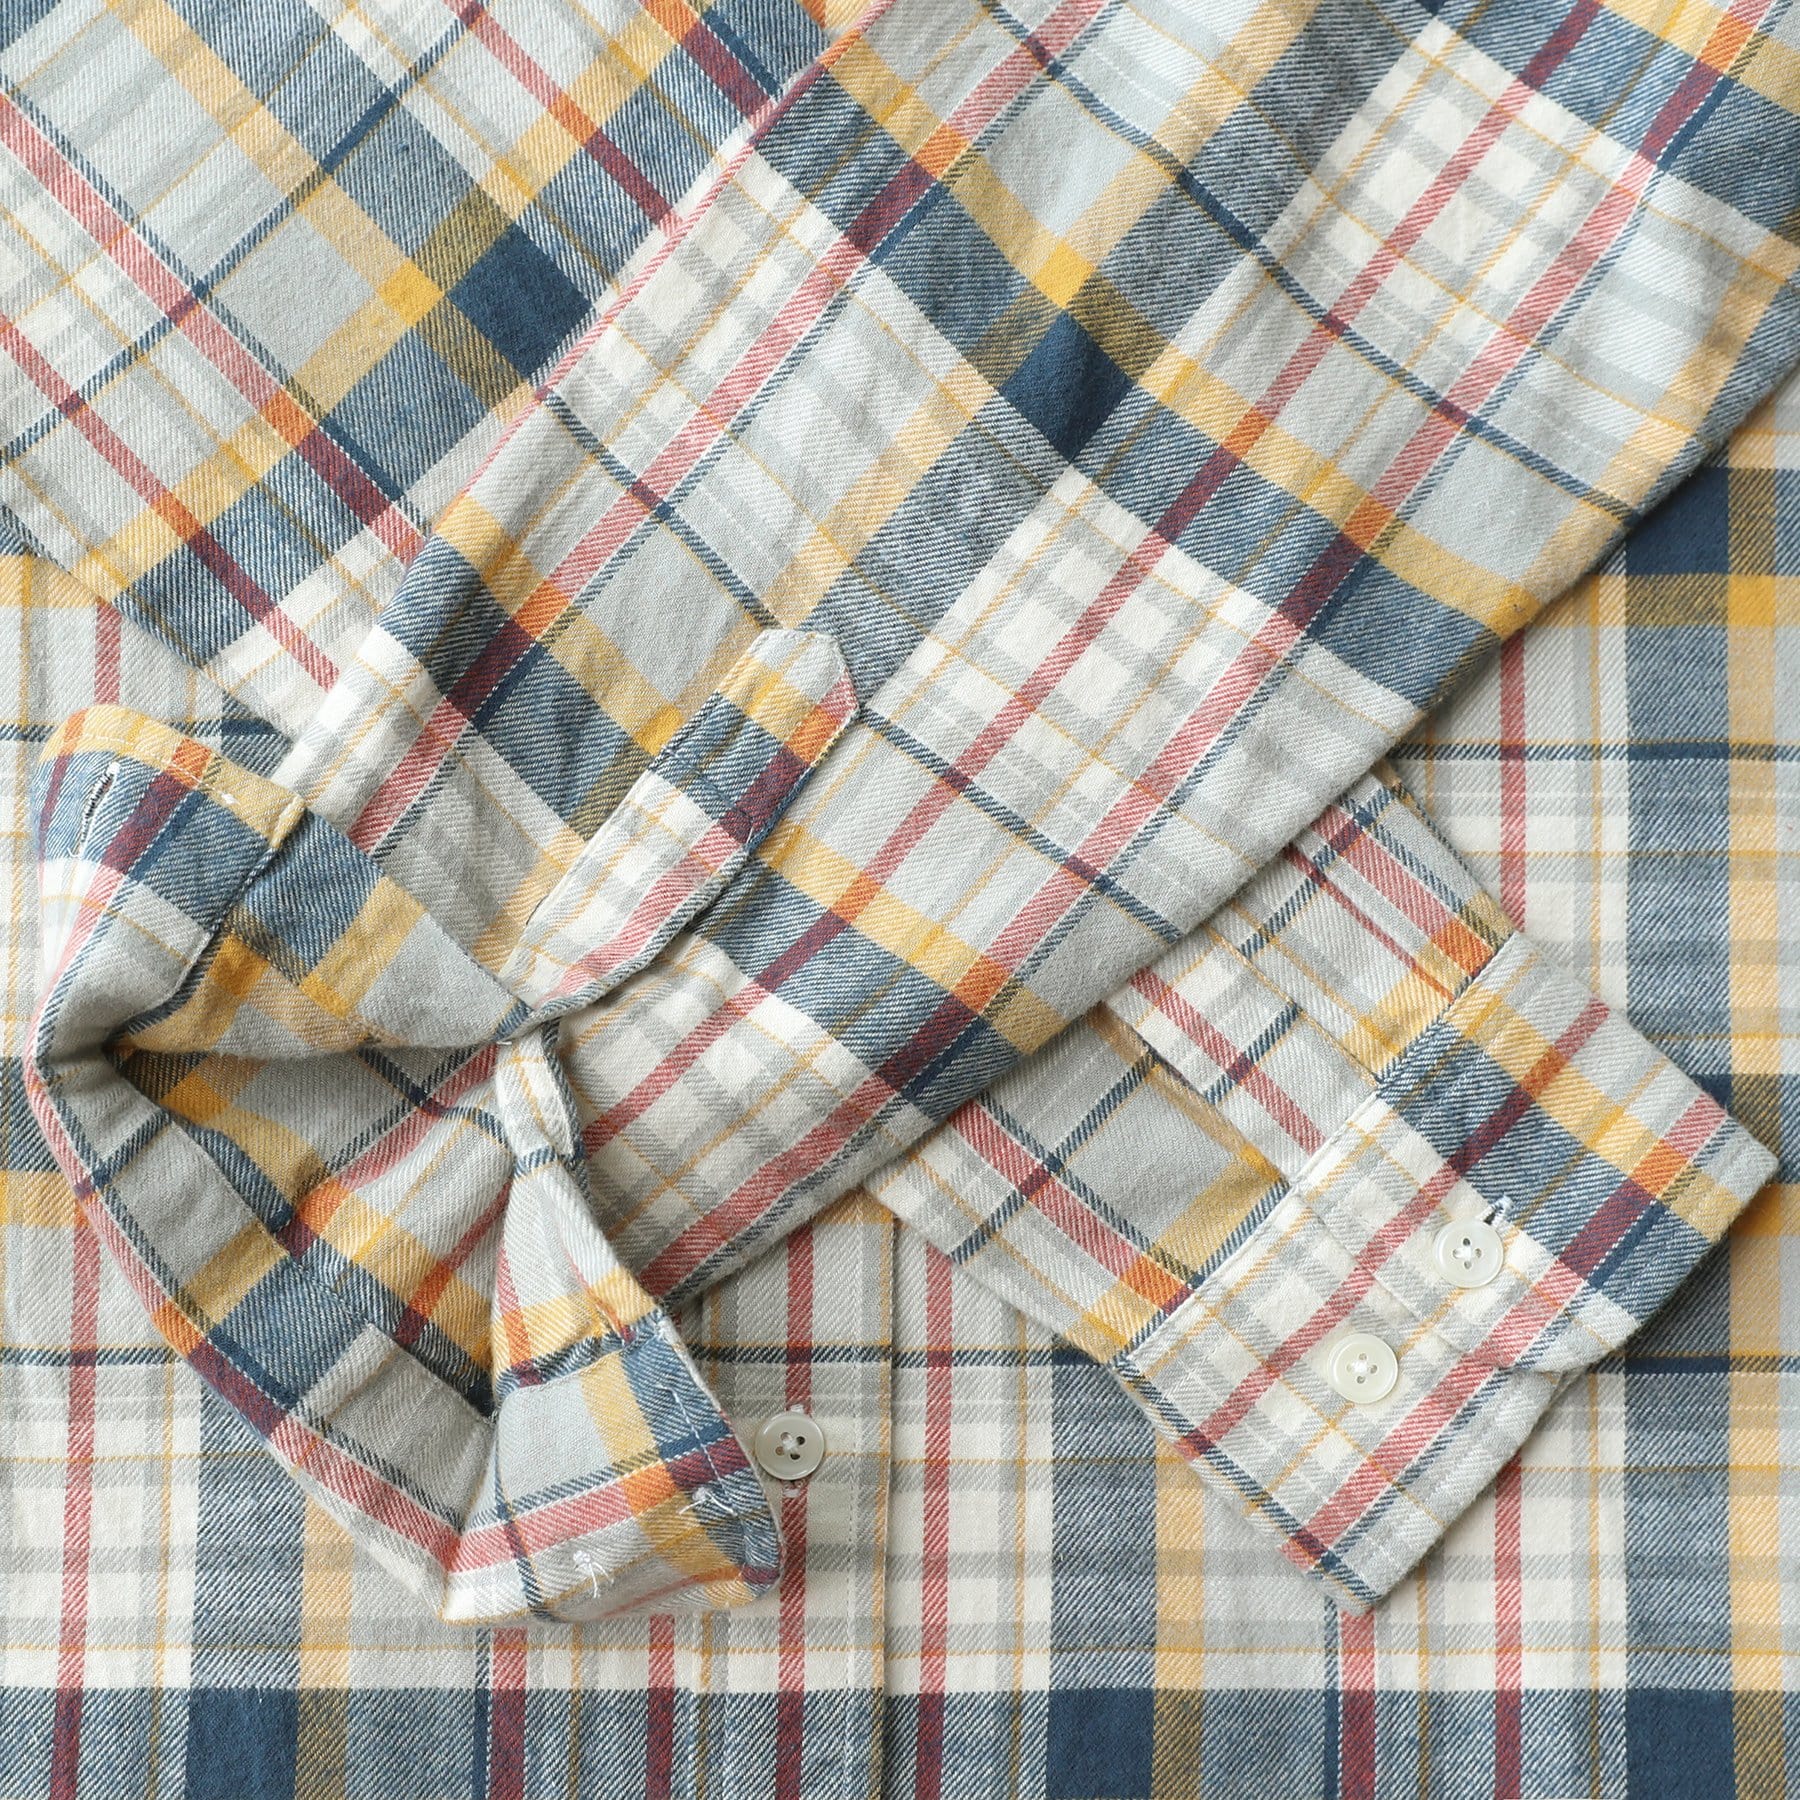 Men's Plaid Flannel Long Sleeve Shirts #0308